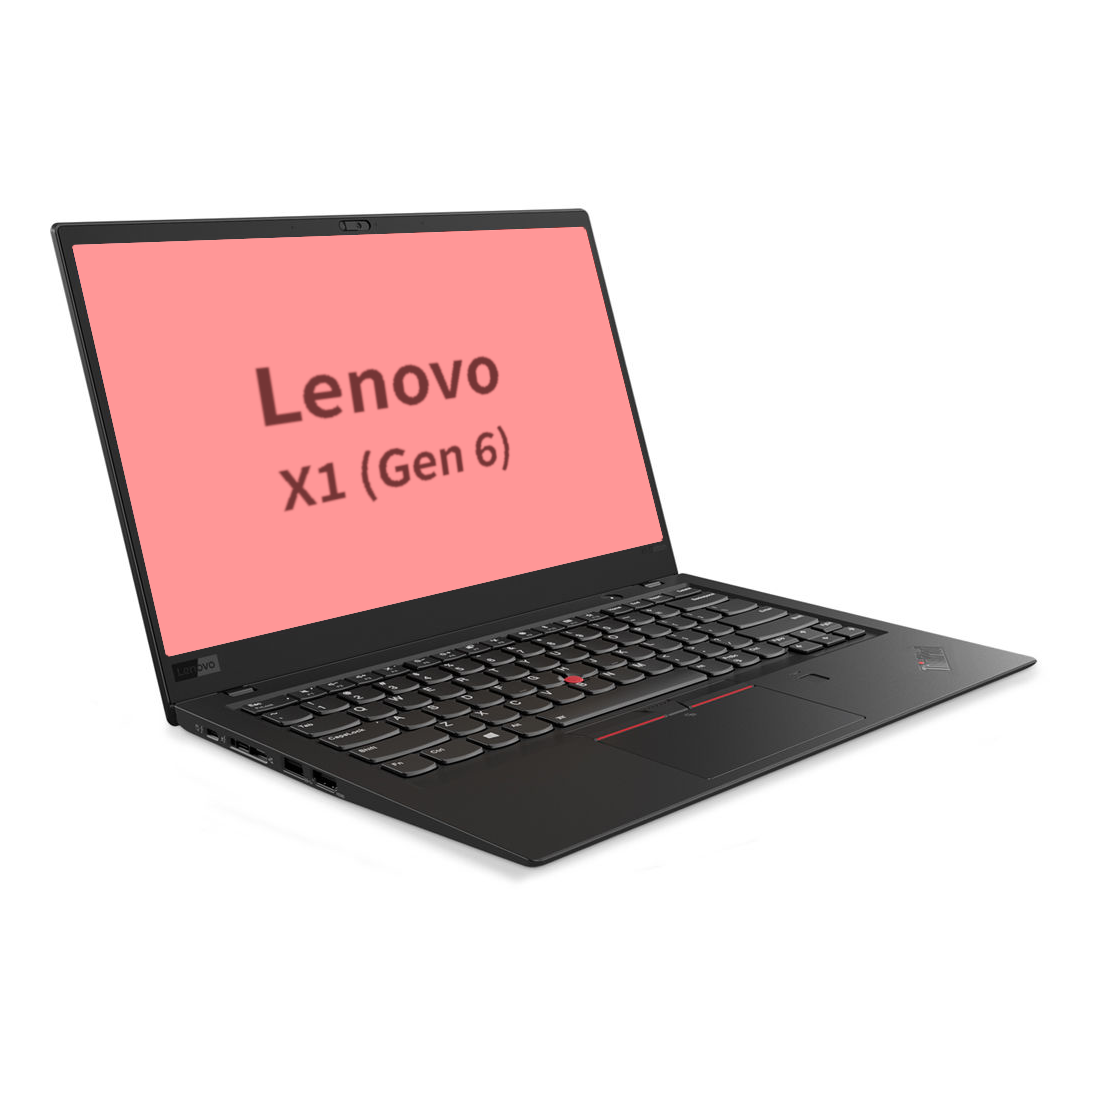 Lenovo ThinkPad X1 Carbon (6th Gen) Laptop For Sale – Laptop Mountain